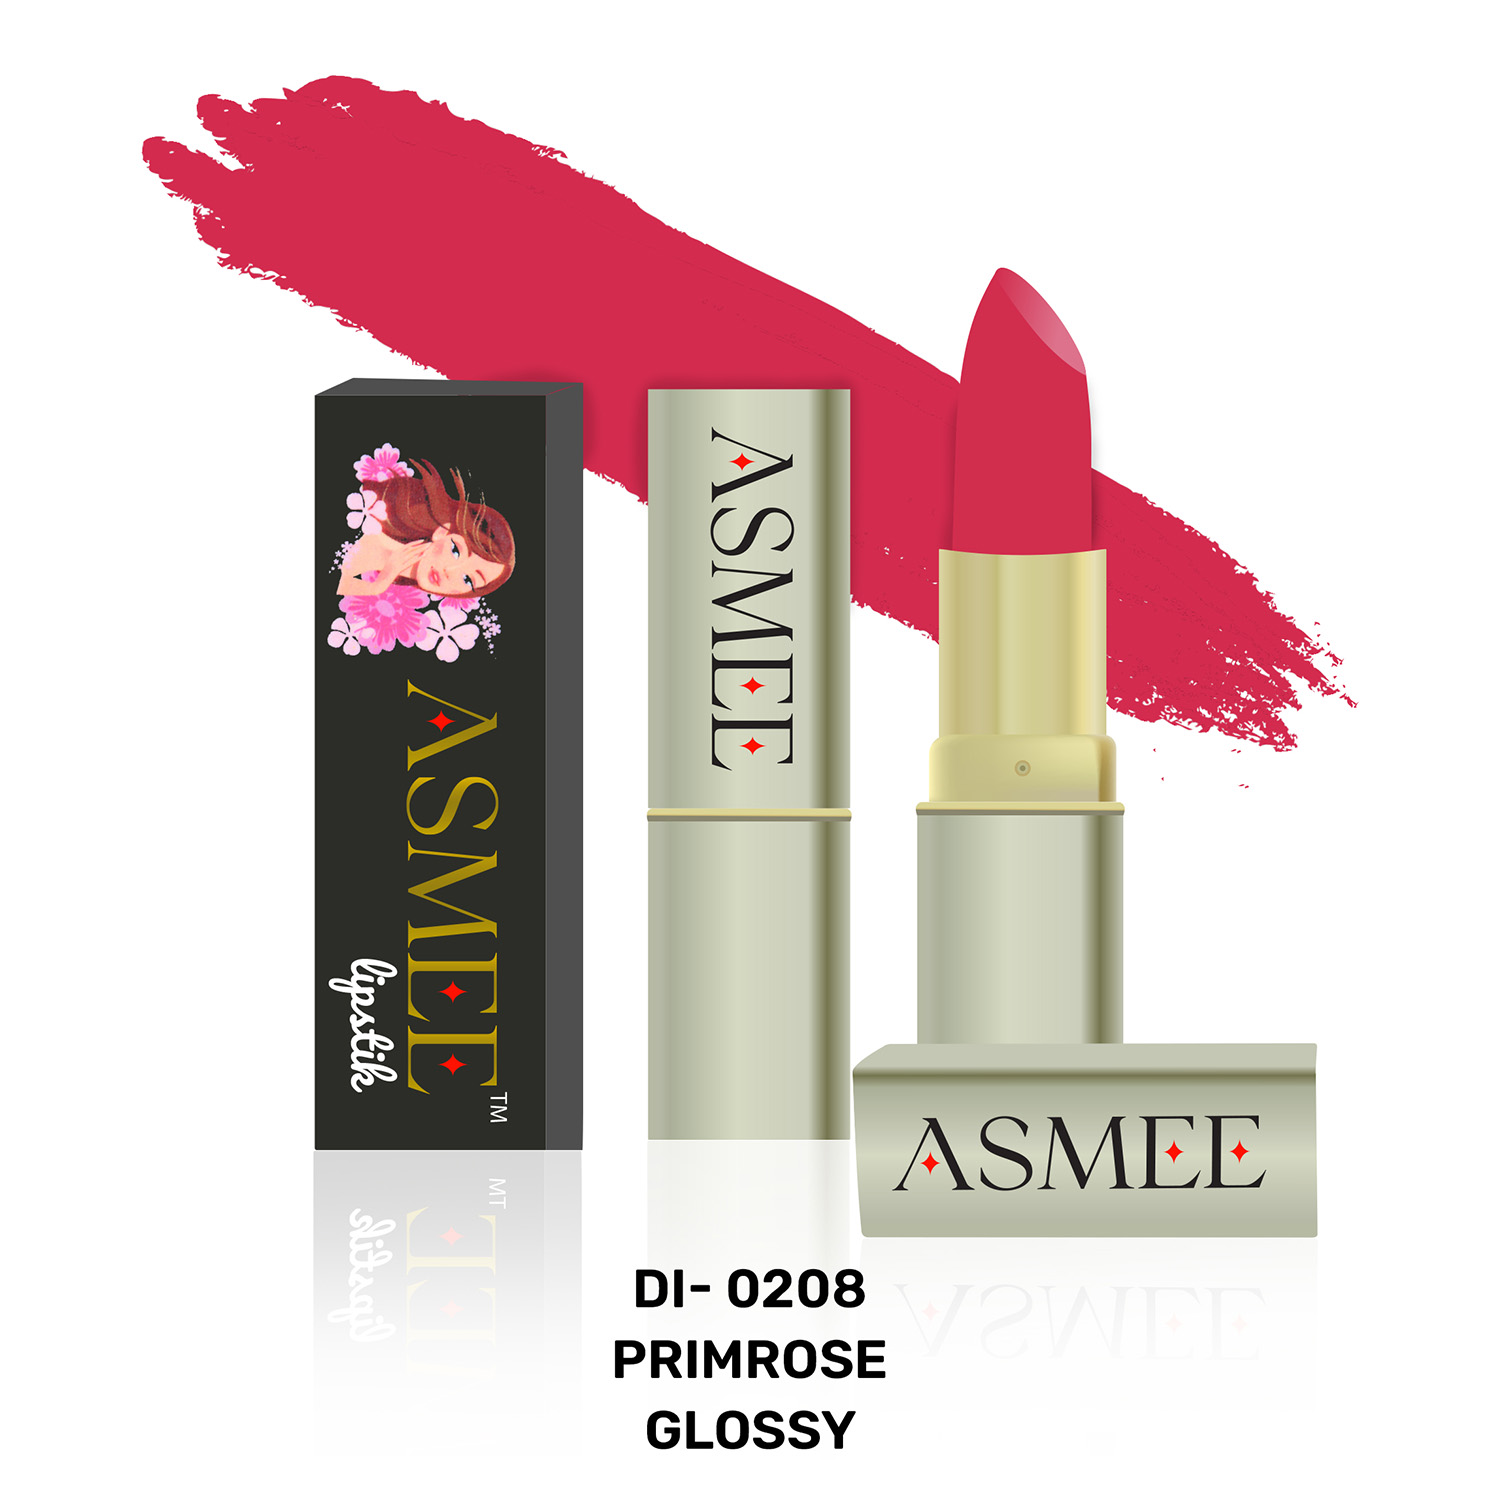 Asmee Glossy Lipstick, 4.2gm - DI-0208 Primrose